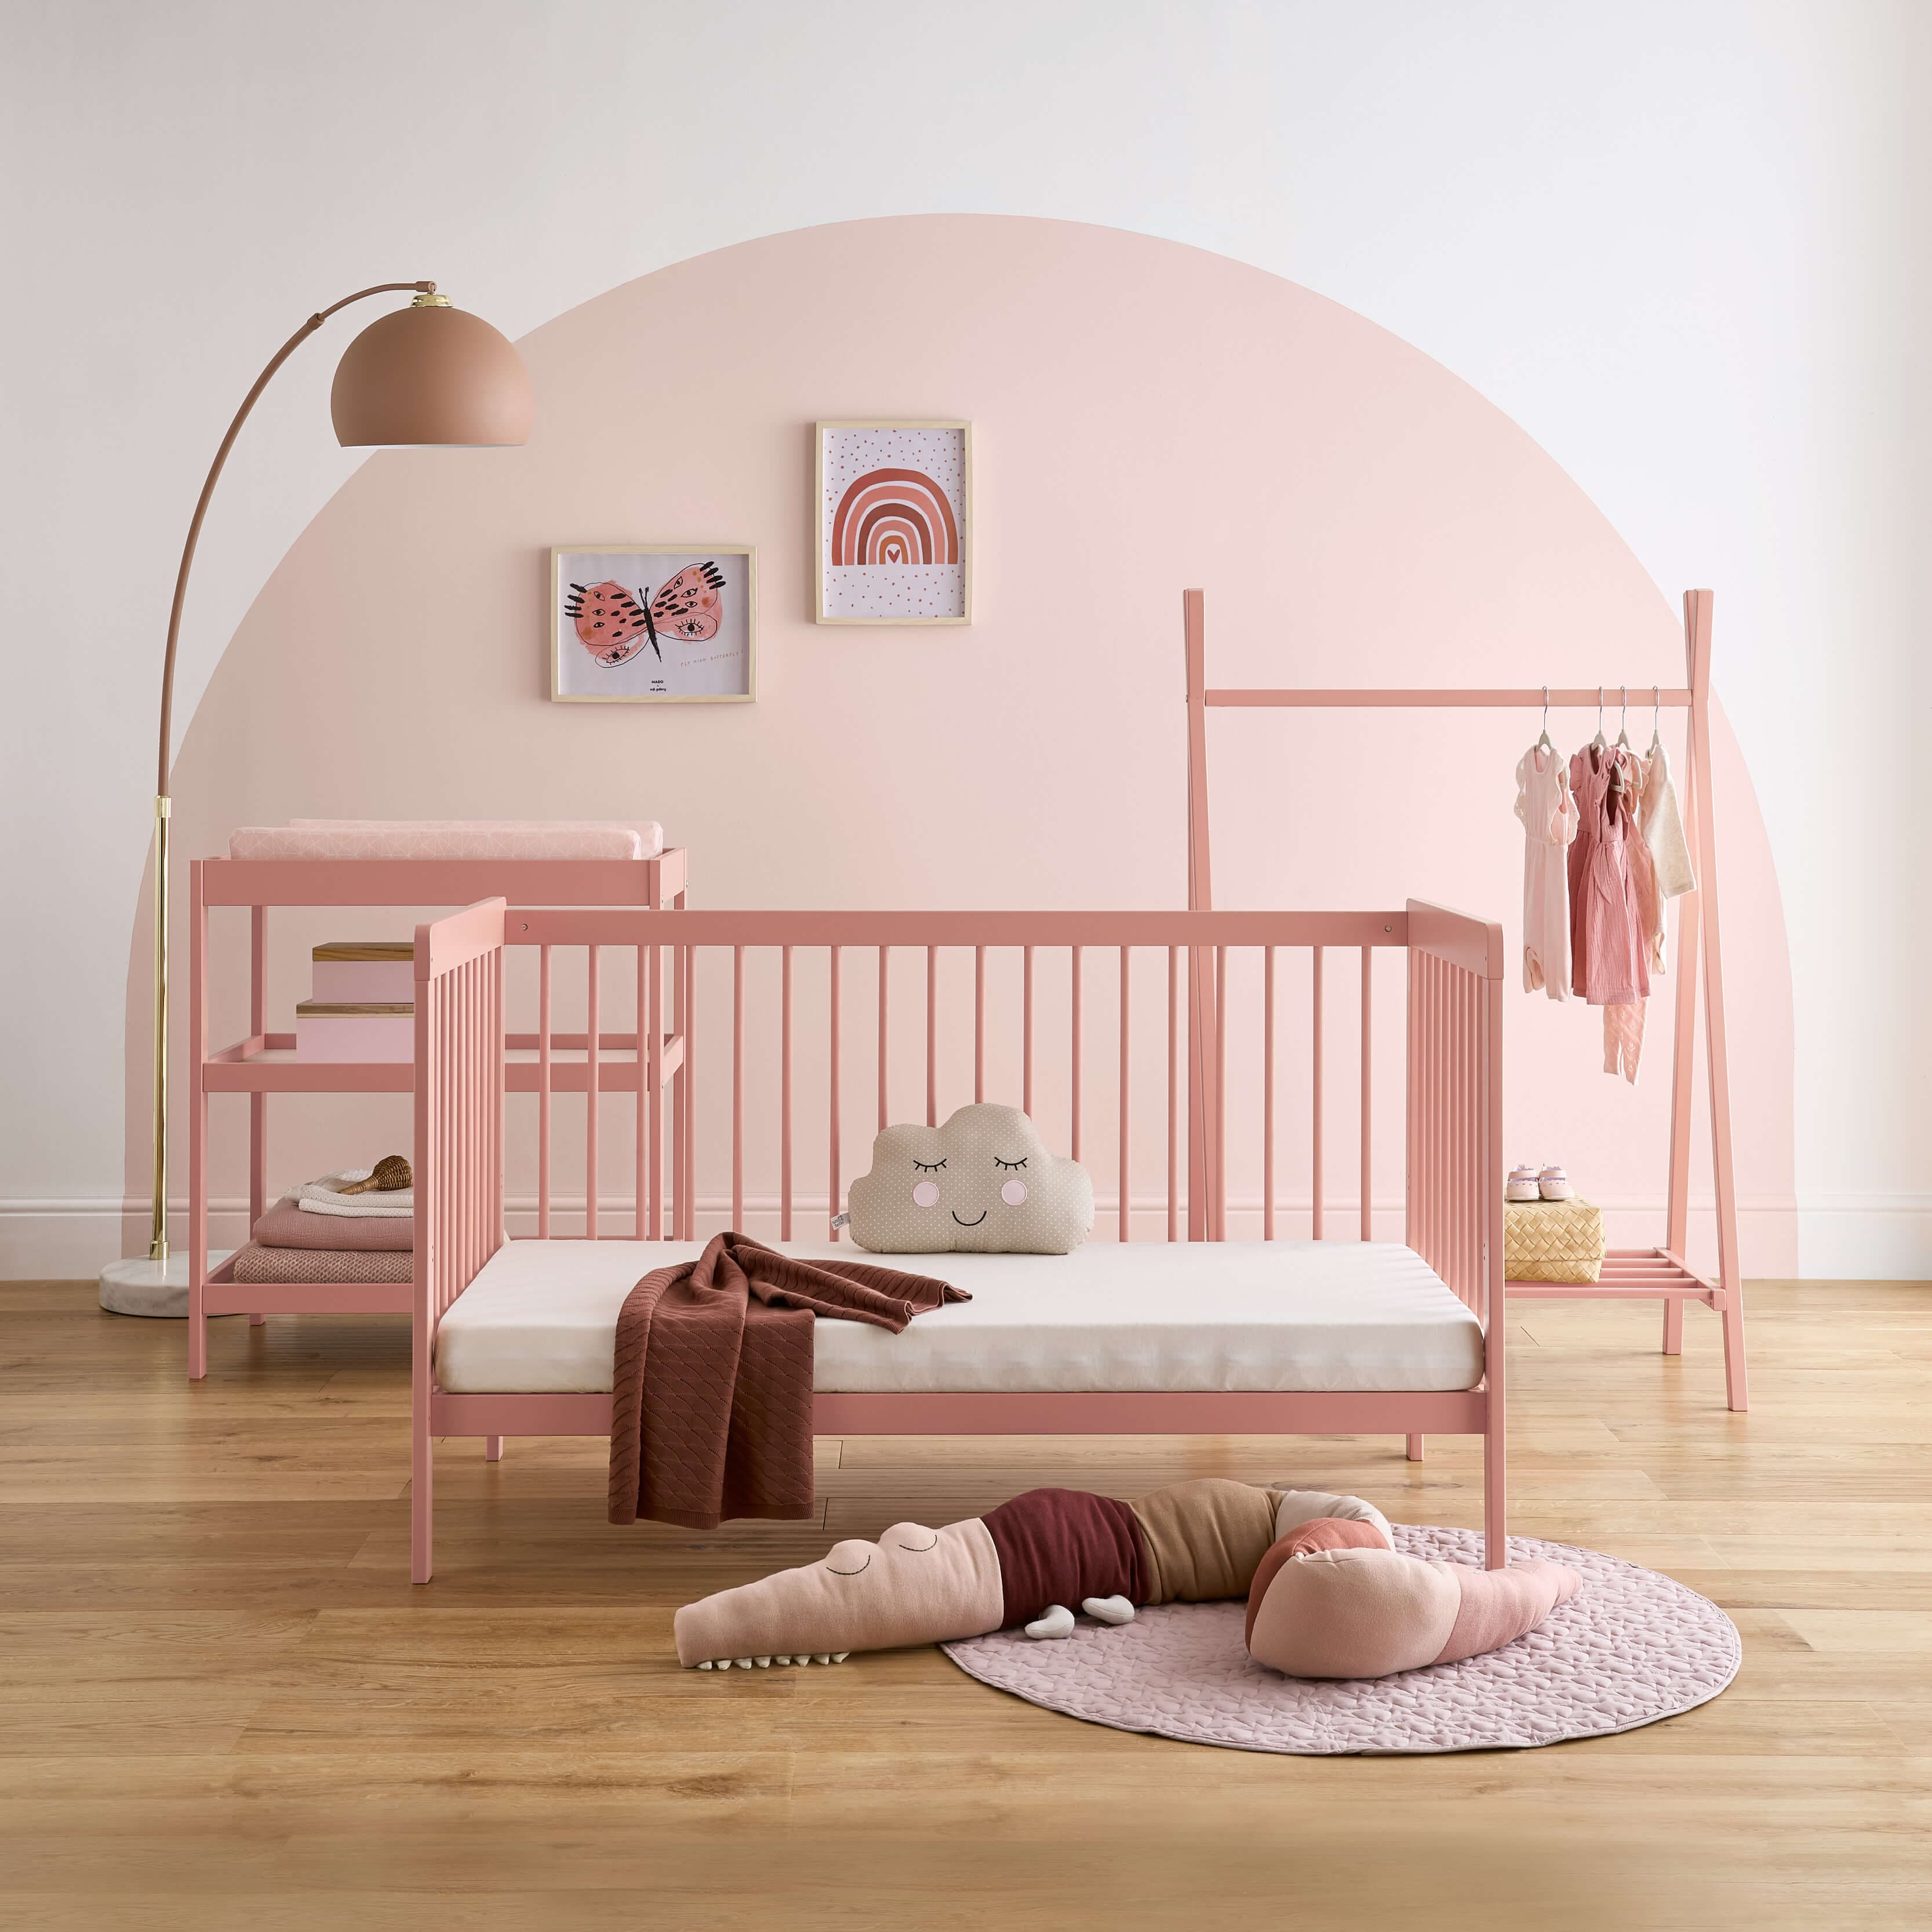 CuddleCo Nursery Room Sets CuddleCo Nola 3 Piece Room Set - Soft Blush